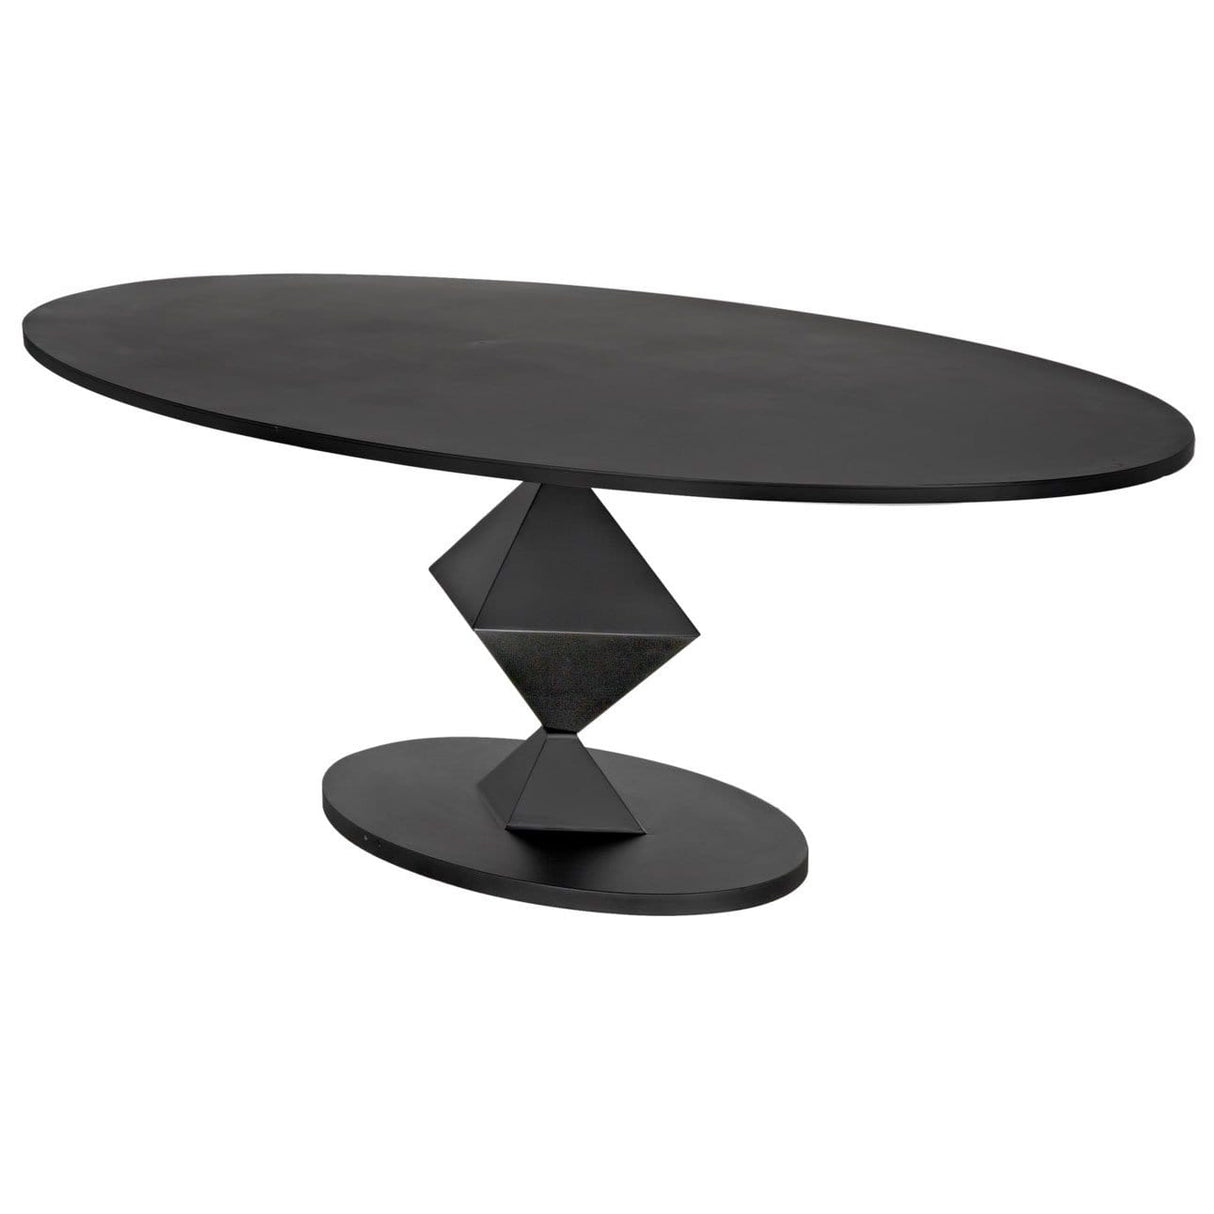 Noir Katana Oval Dining Table - HOLD FOR PRICING Furniture noir-GTAB565MTB